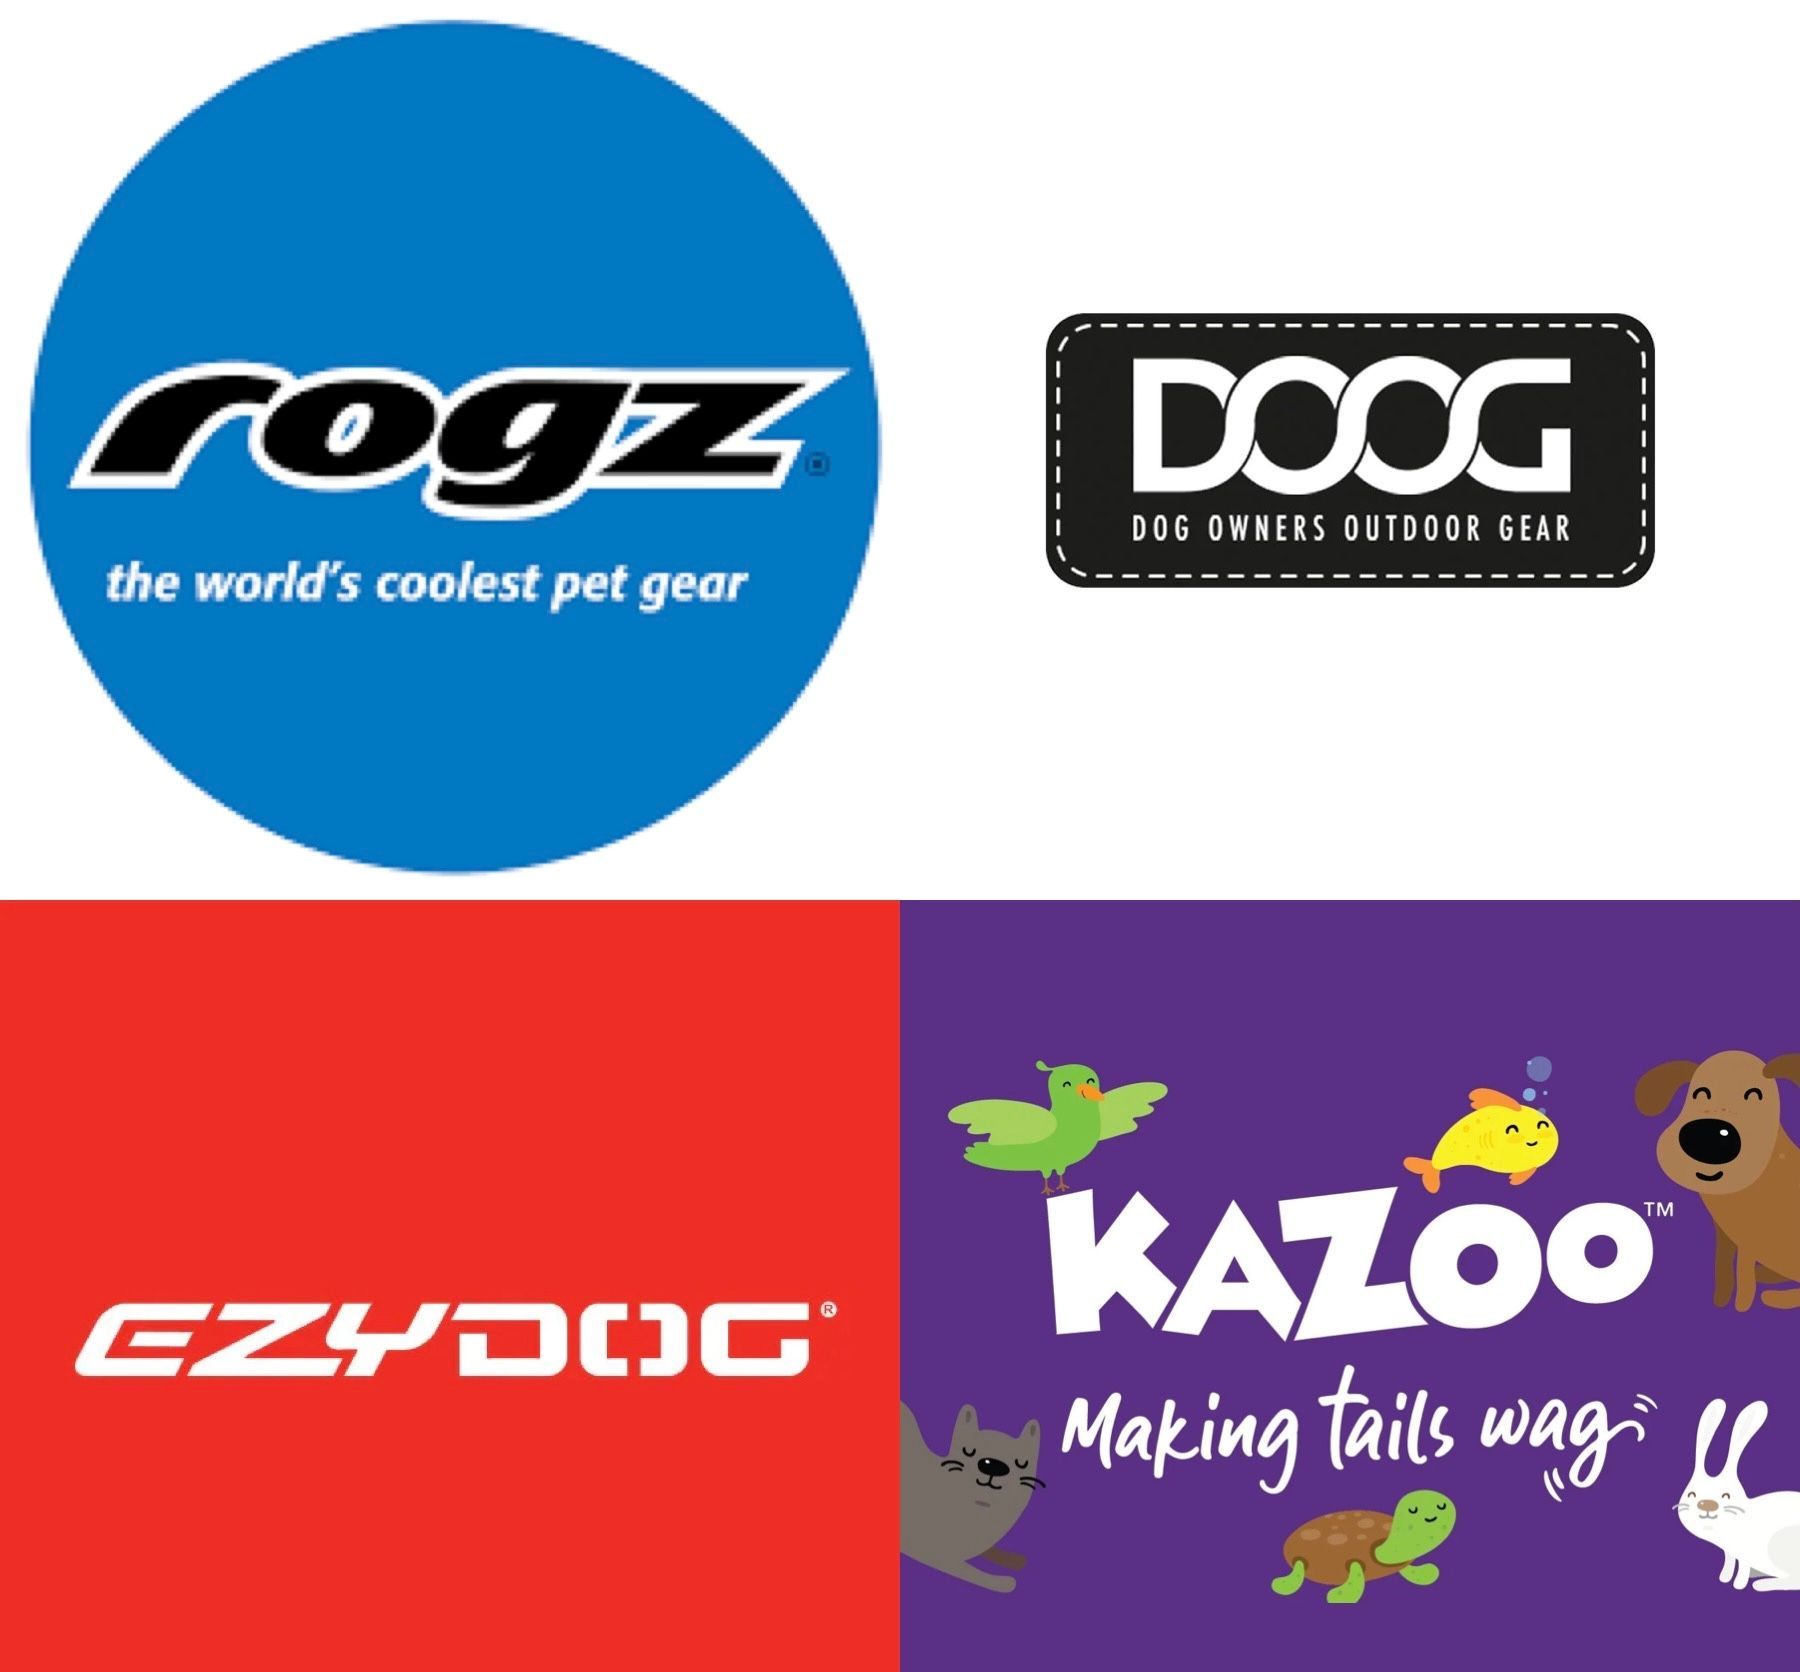  dog-brands-we-stock-1